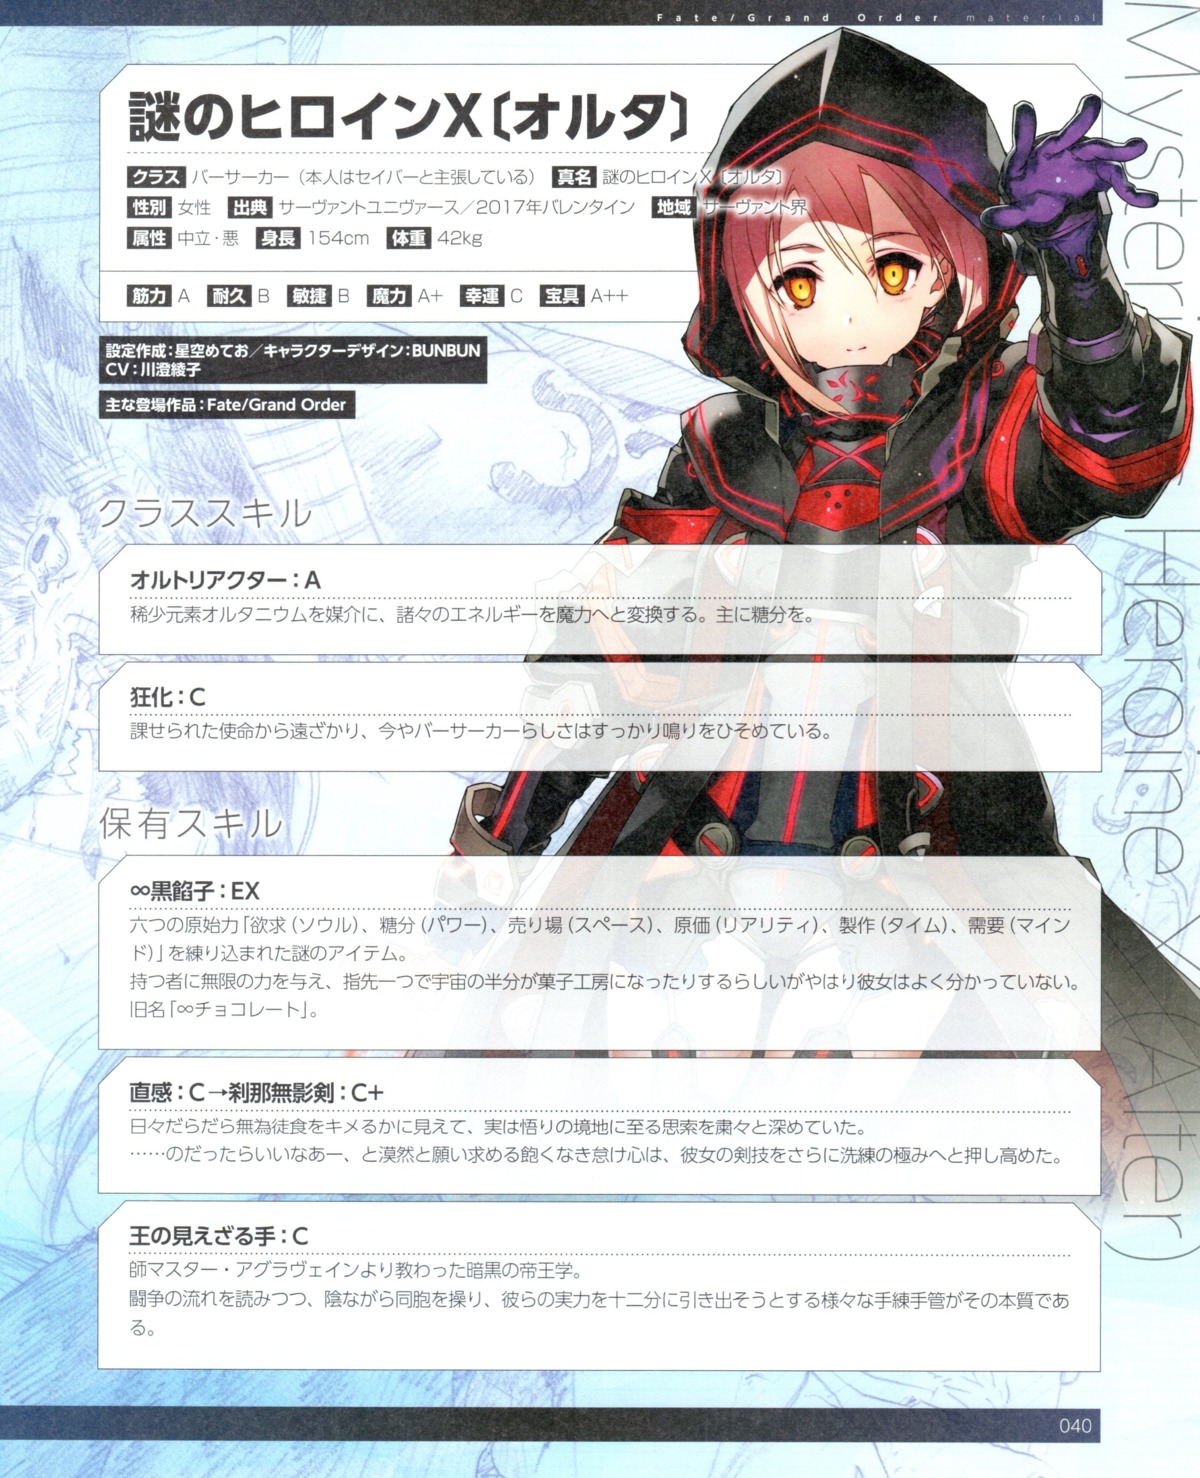 armor bunbun fate/grand_order heroine_x_alter profile_page type-moon